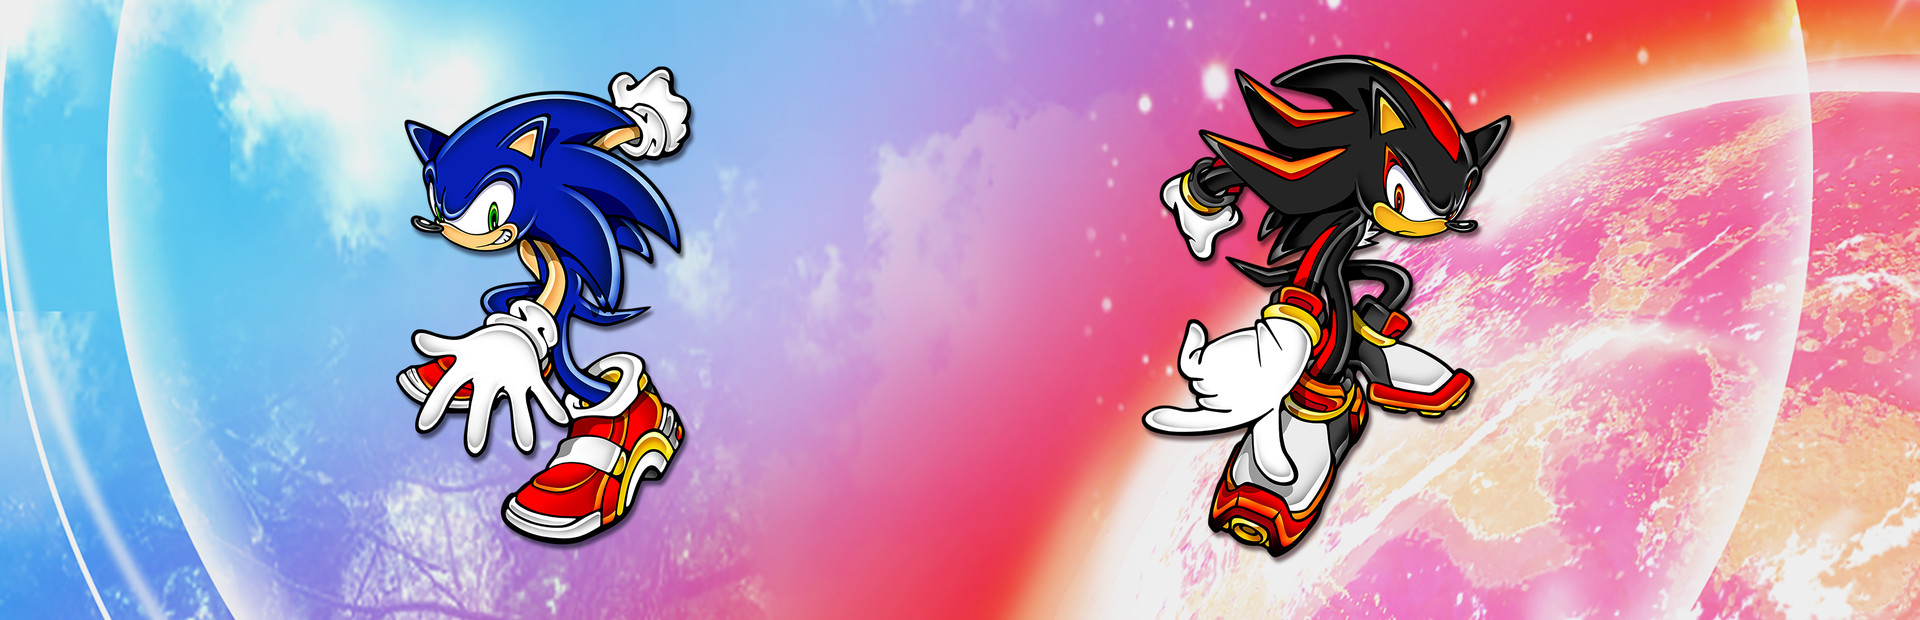 Sonic Adventure 2 cover image